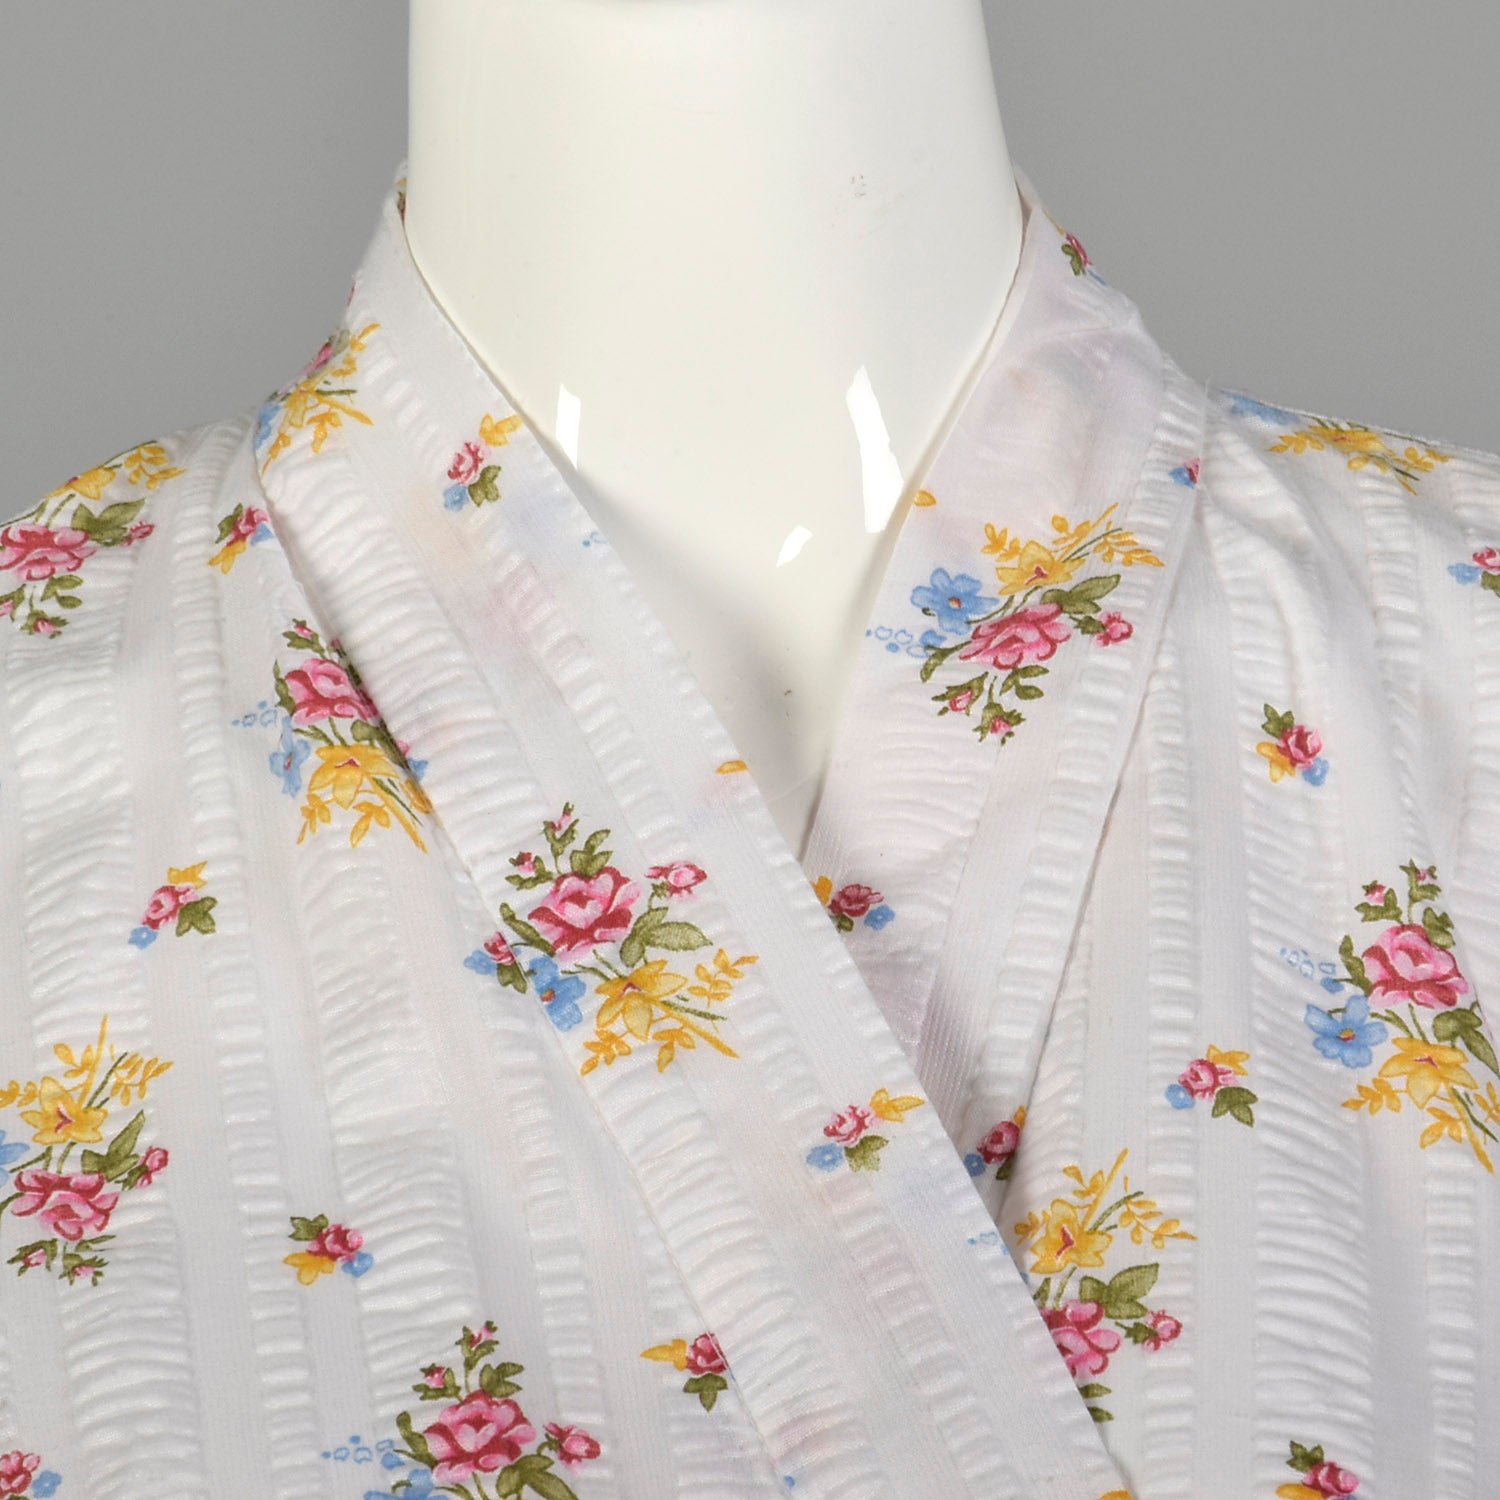 White Cotton 1970s Kimono Floral Seersucker Robe Long Sleeve